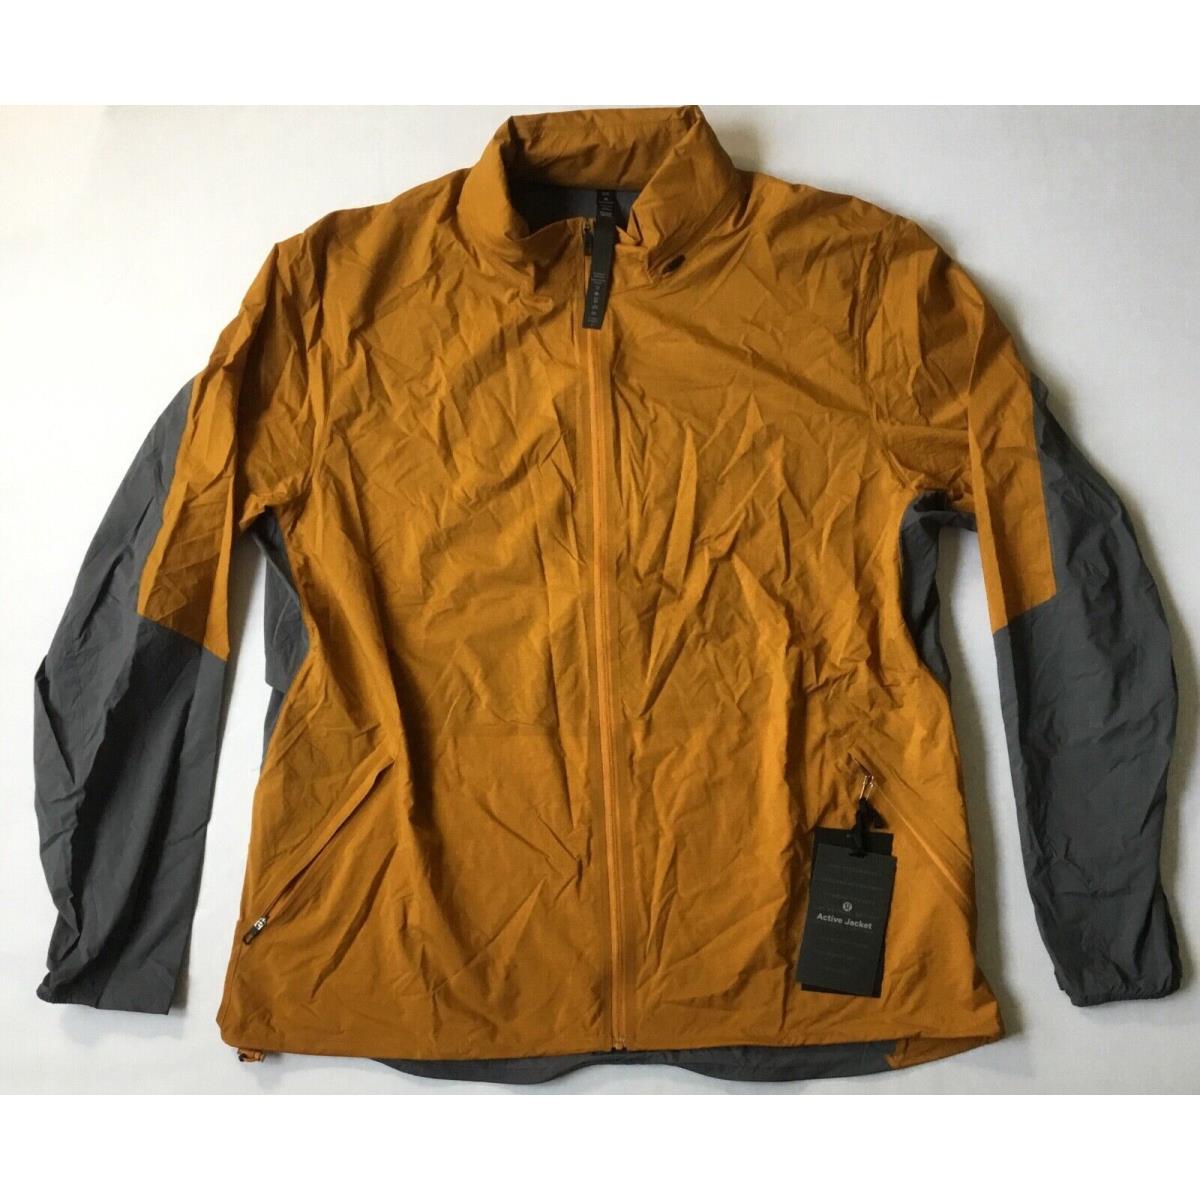 Lululemon Men s Active Jacket Fsgd/anch Yellow LM4686S Size XL |  036282717862 - Lululemon clothing - Yellow | SporTipTop